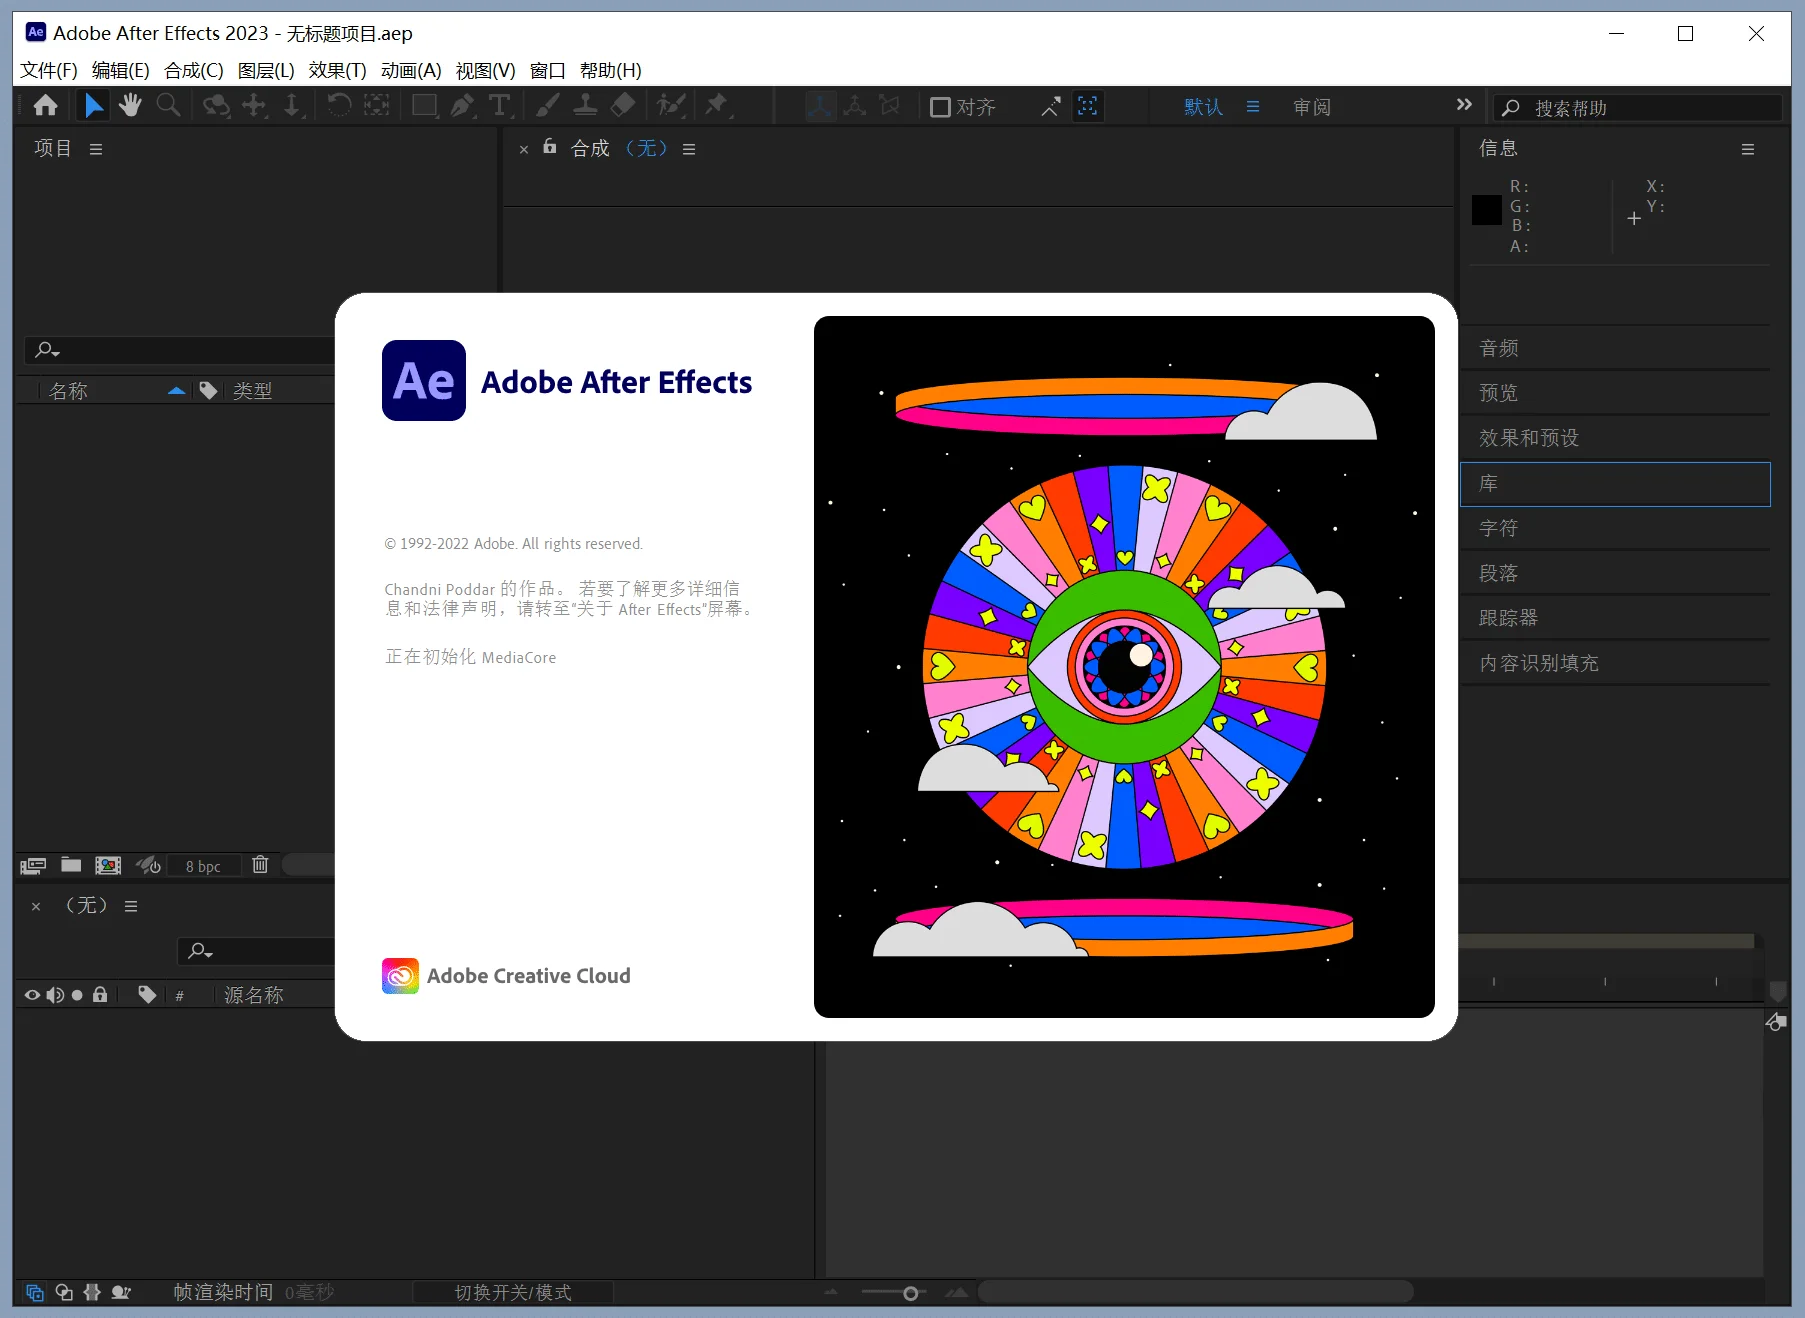 Adobe After Effects 2023 (23.6.0) 特别版